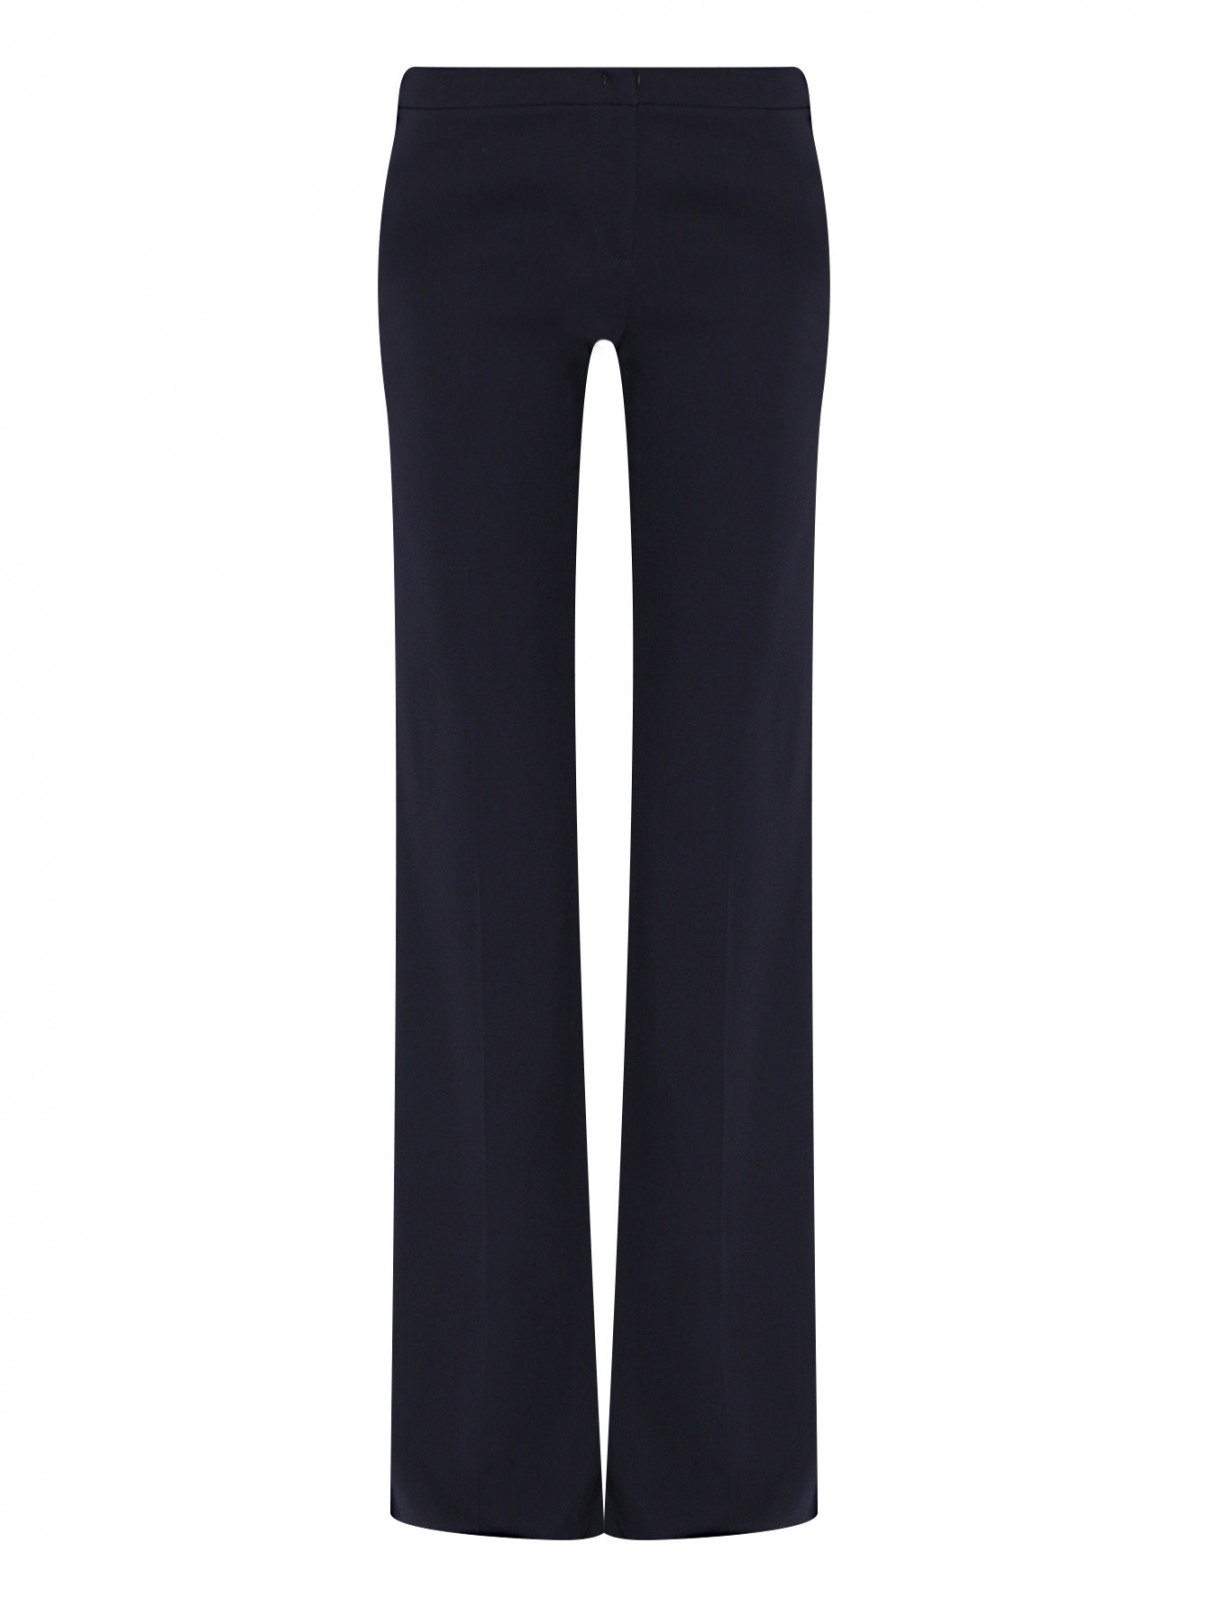 Широкие брюки с карманами PennyBlack  –  Общий вид  – Цвет:  Синий